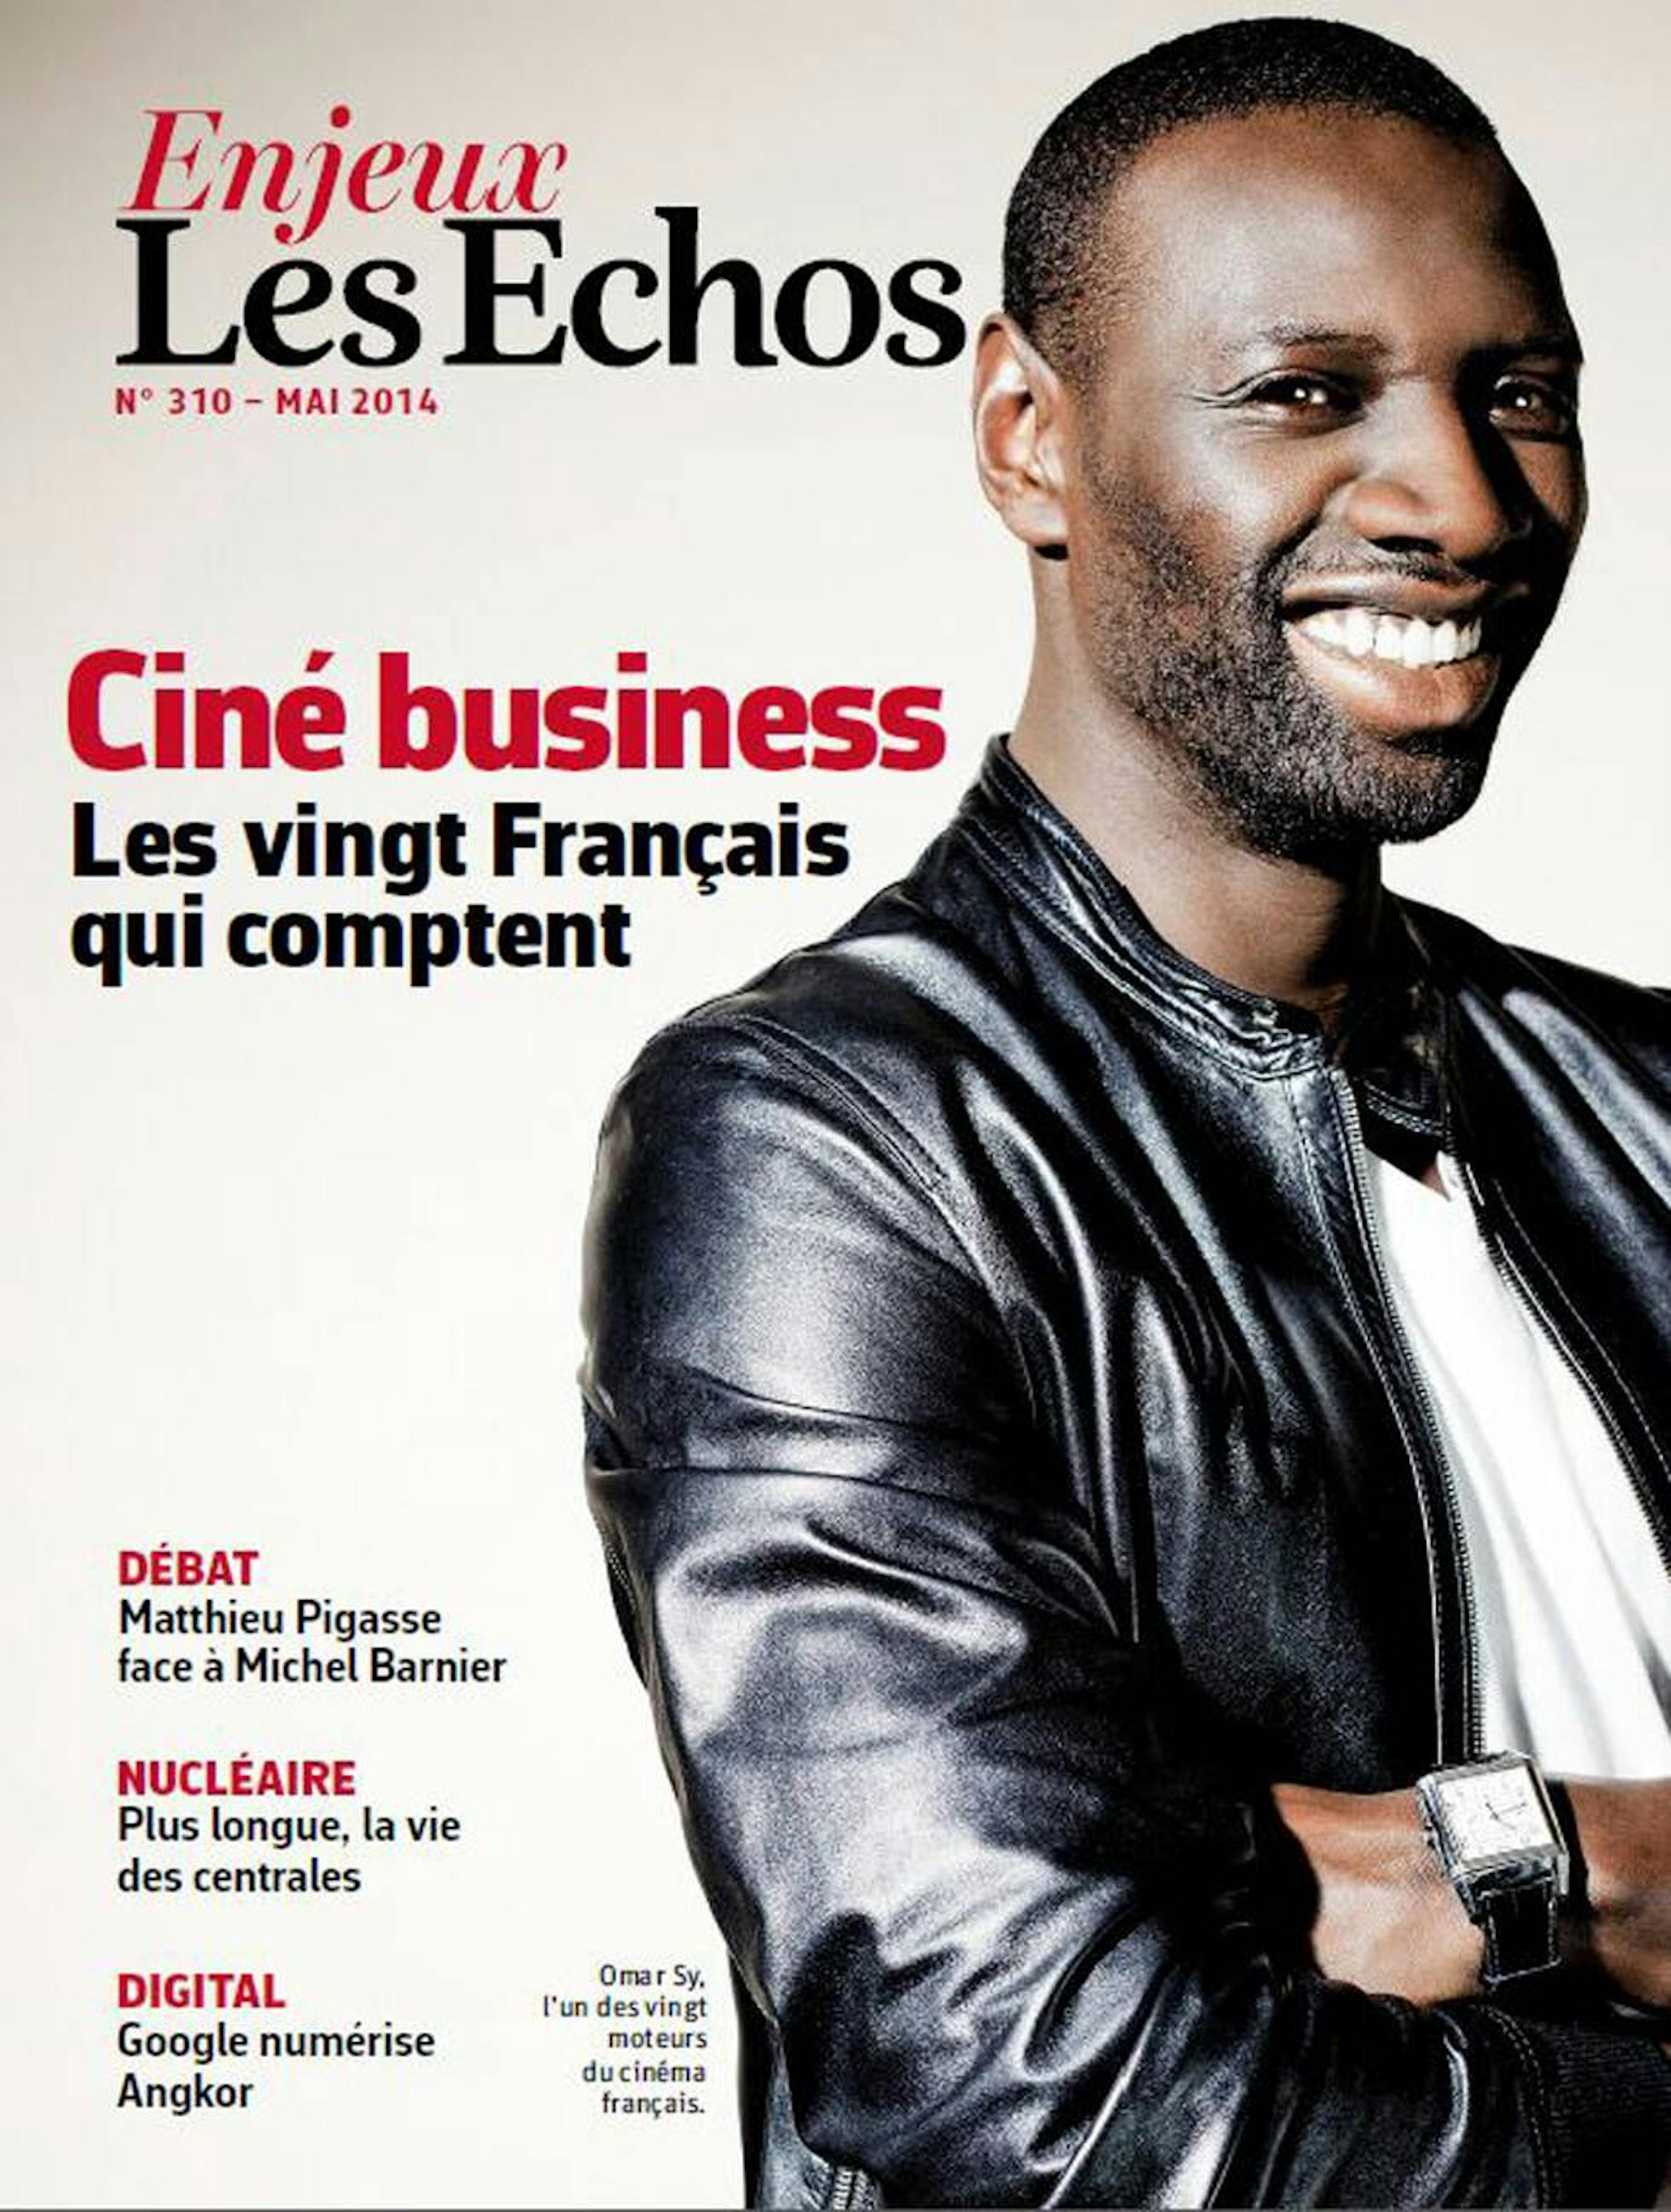 Enjeux Les Echos - May 2014 Issue.